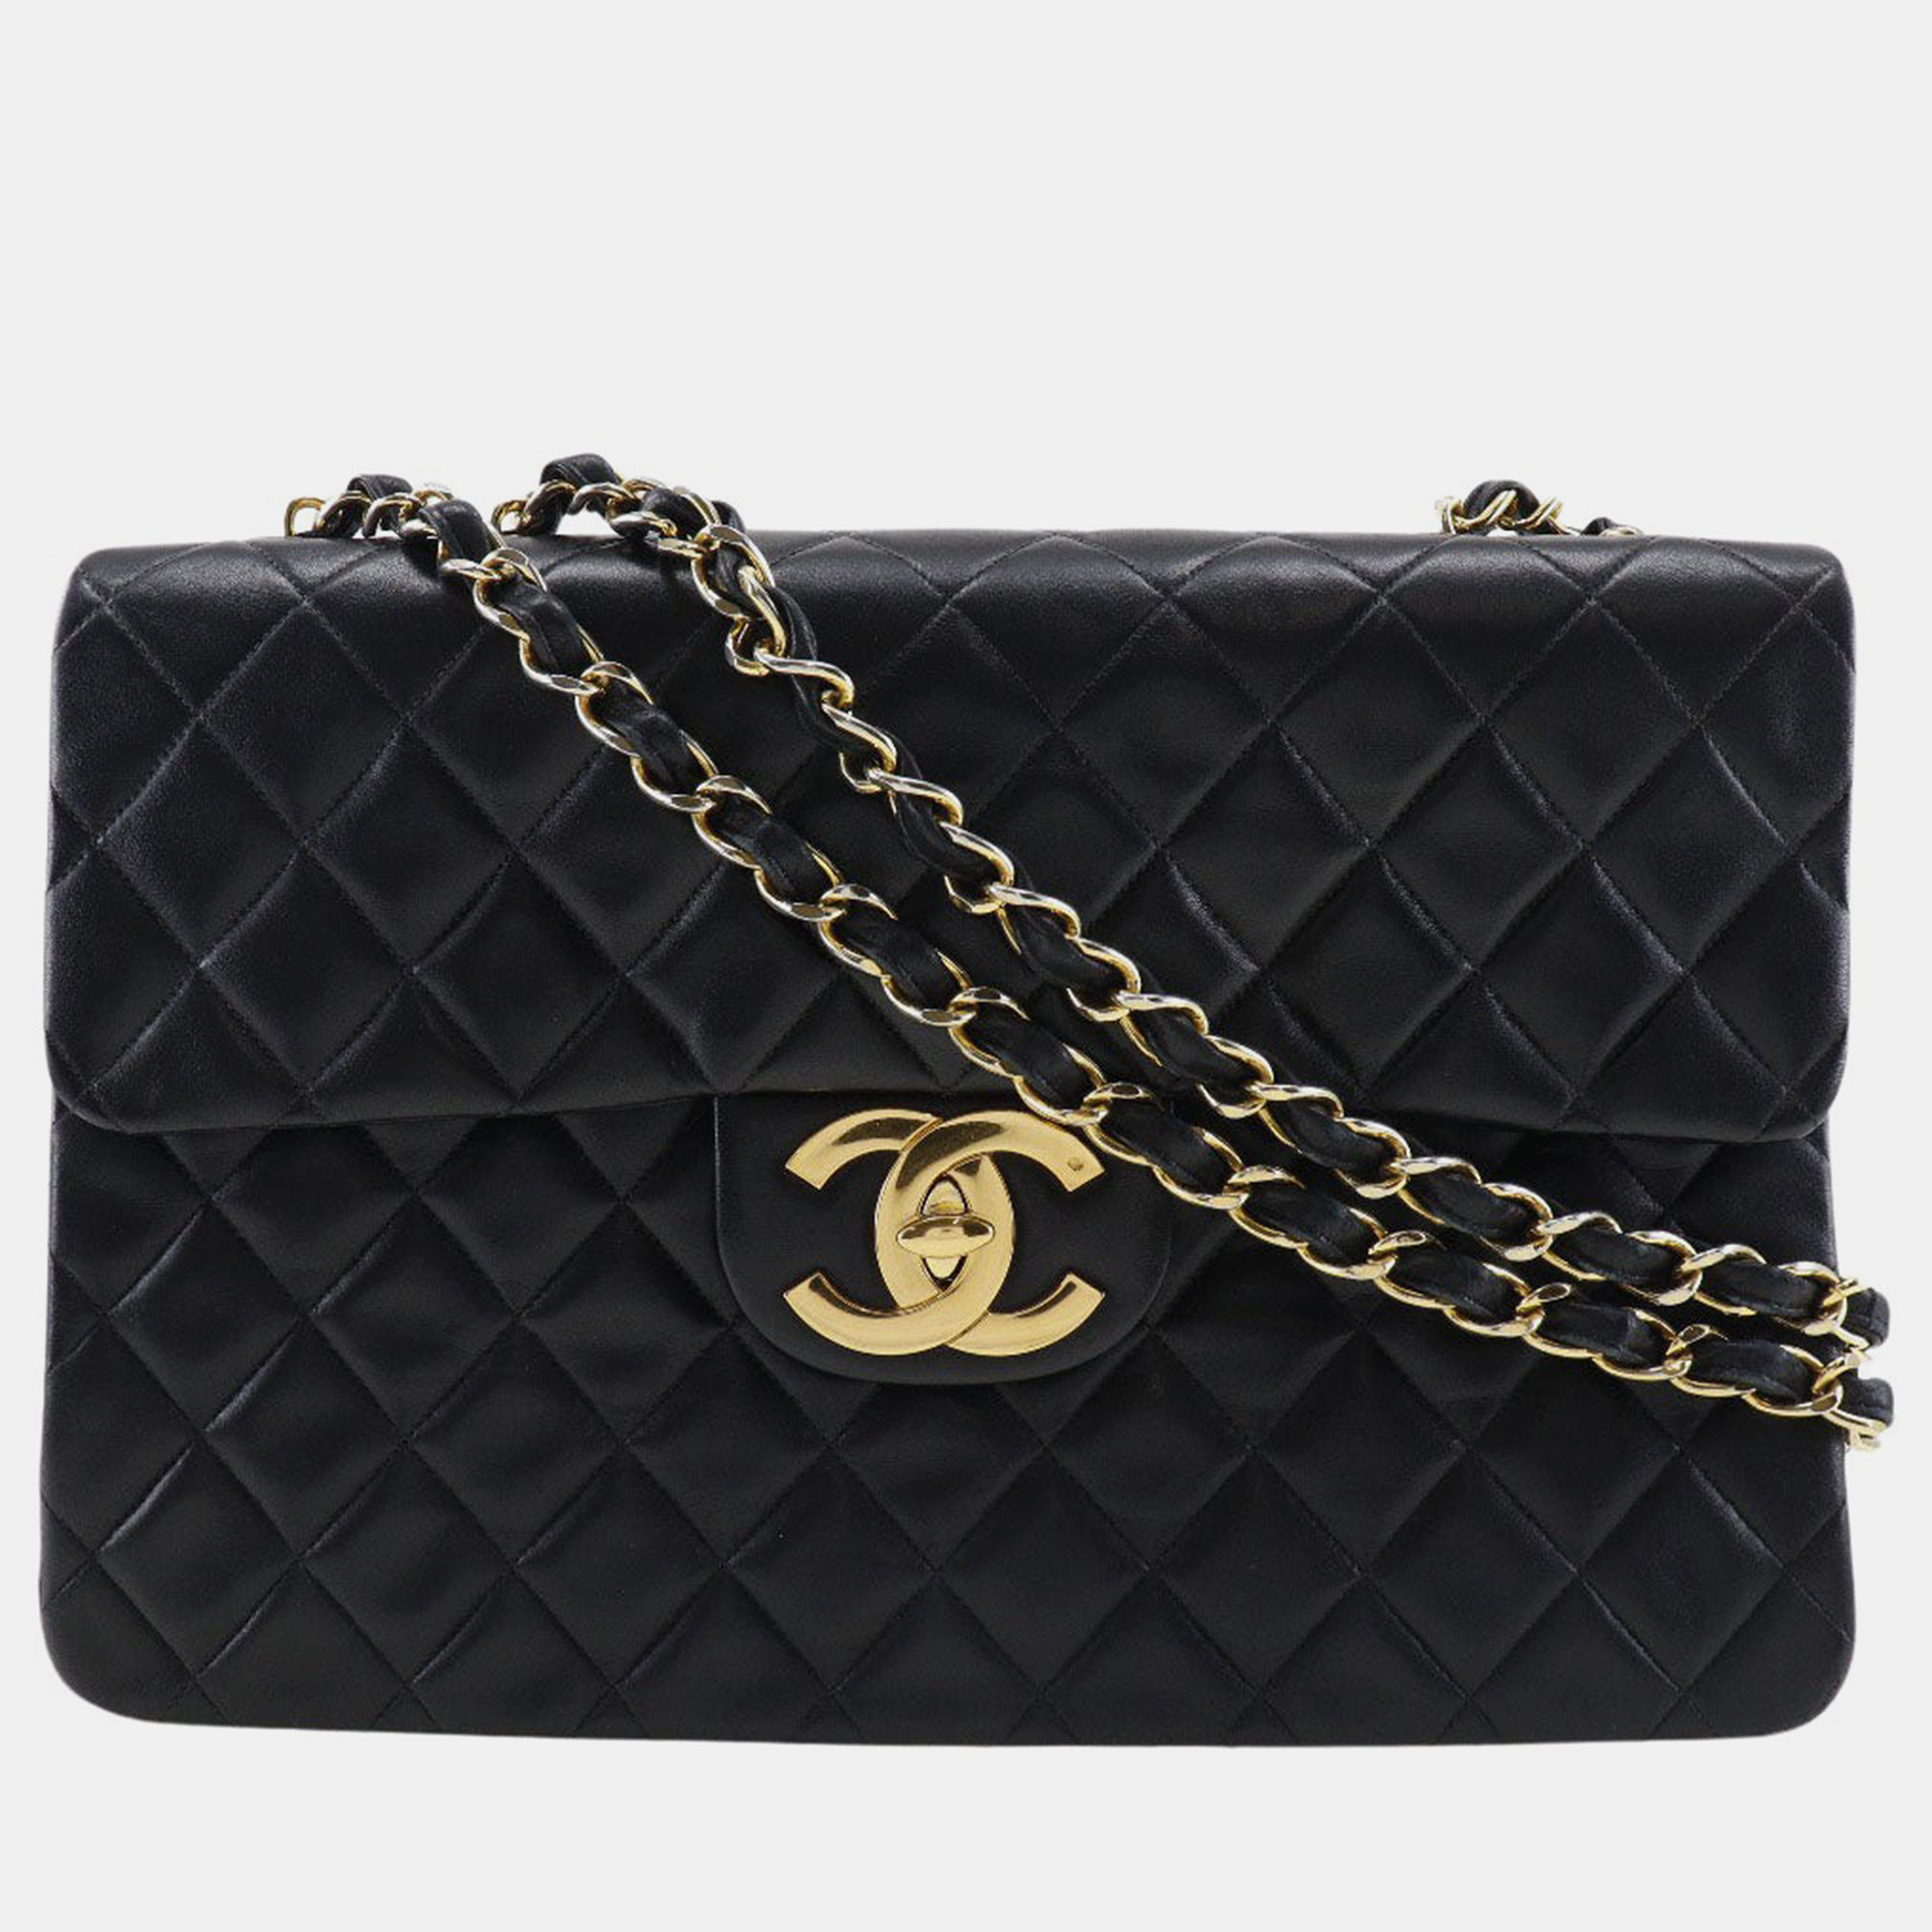 Chanel black lambskin leather vintage flap bag